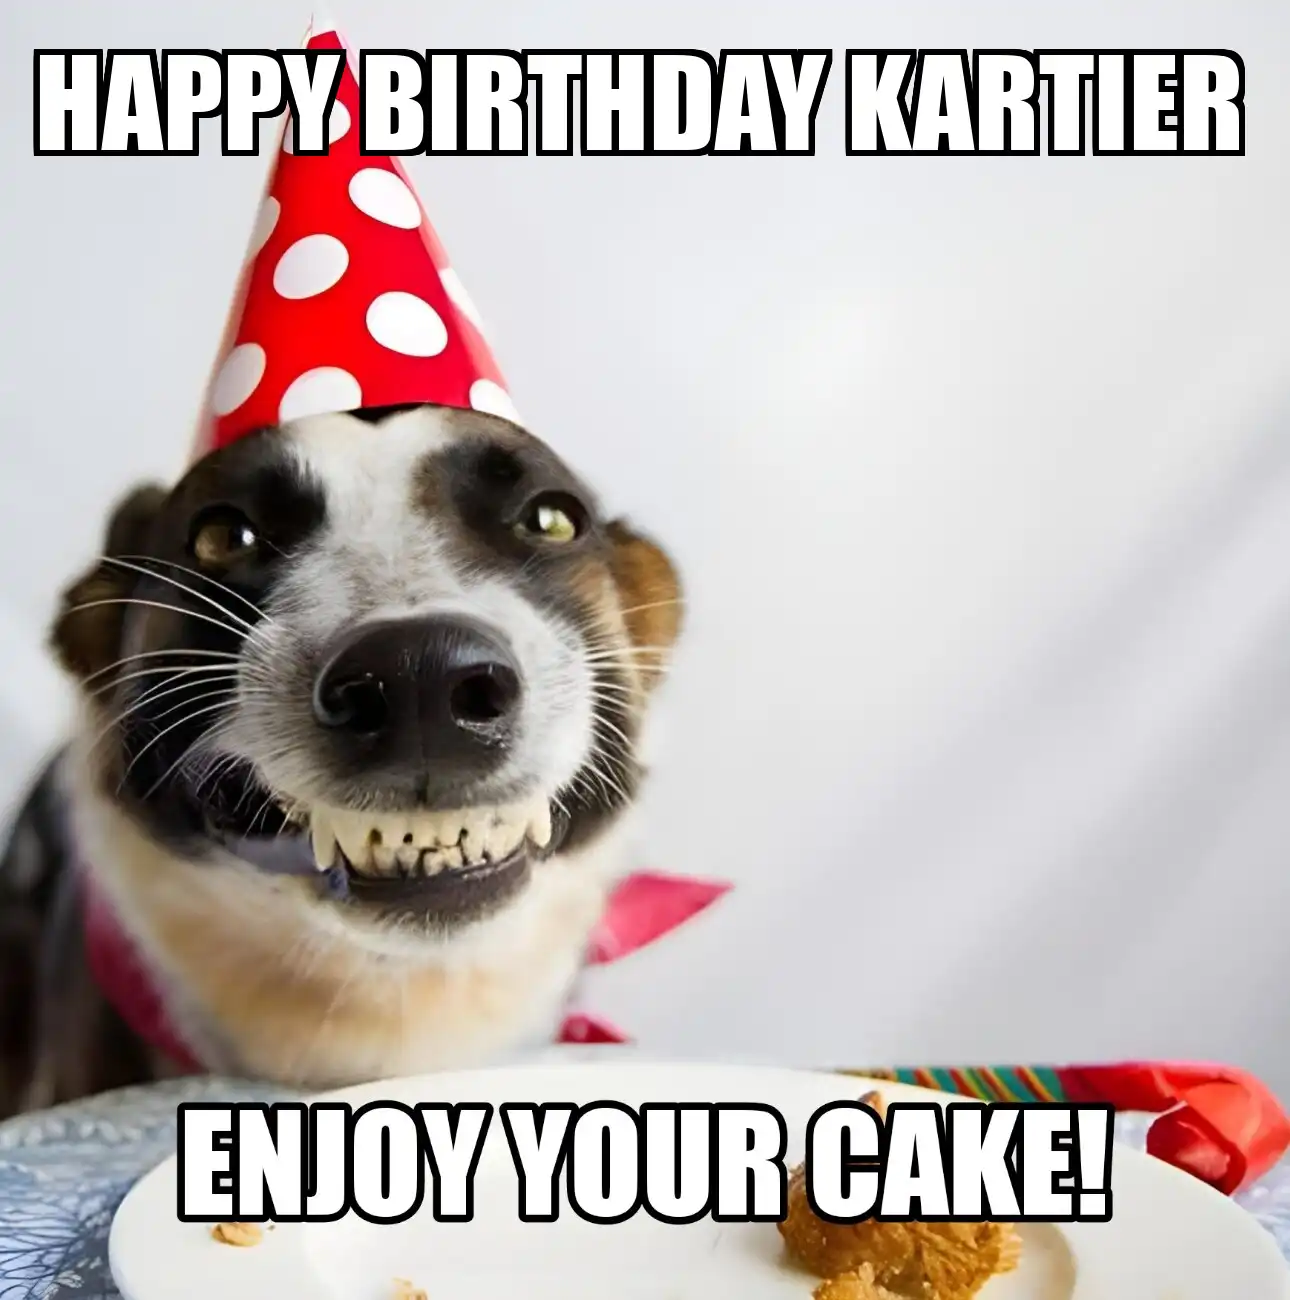 Happy Birthday Kartier Enjoy Your Cake Dog Meme